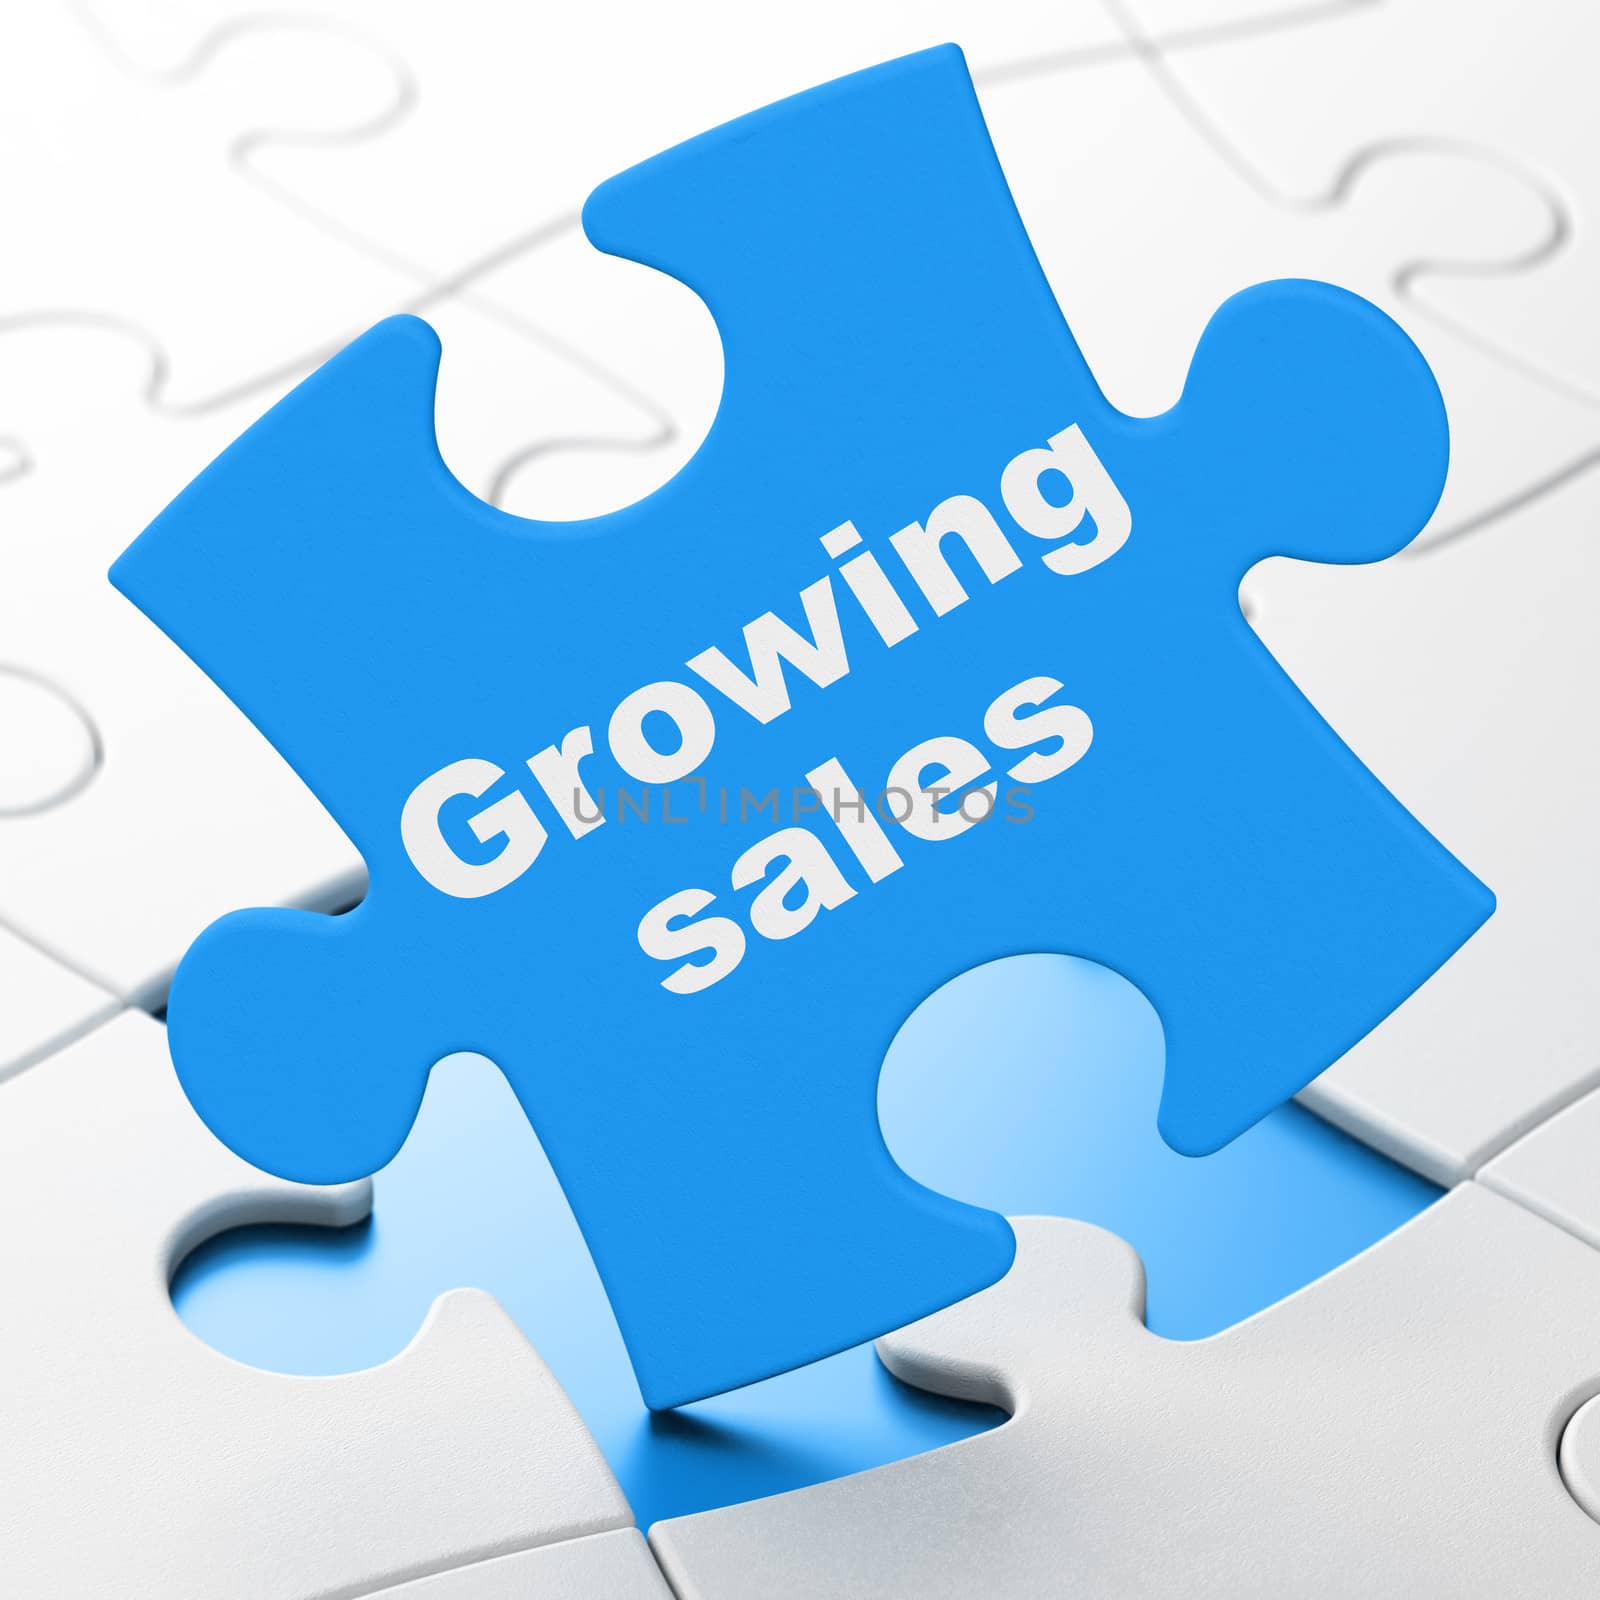 Finance concept: Growing Sales on Blue puzzle pieces background, 3d render